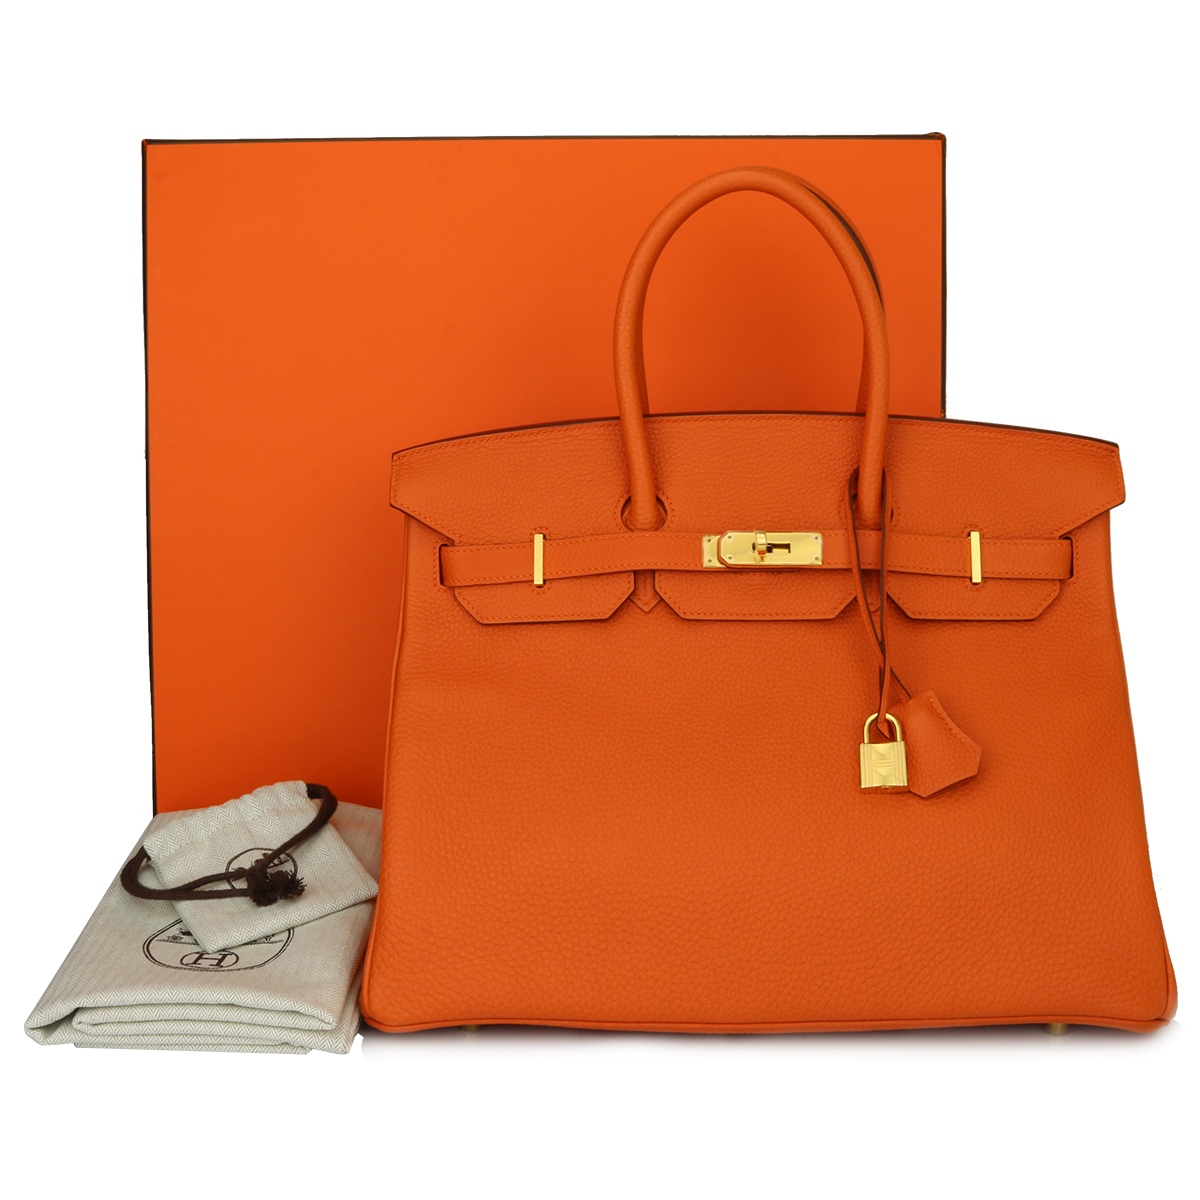 Hermes birkin orange bag hi-res stock photography and images - Alamy